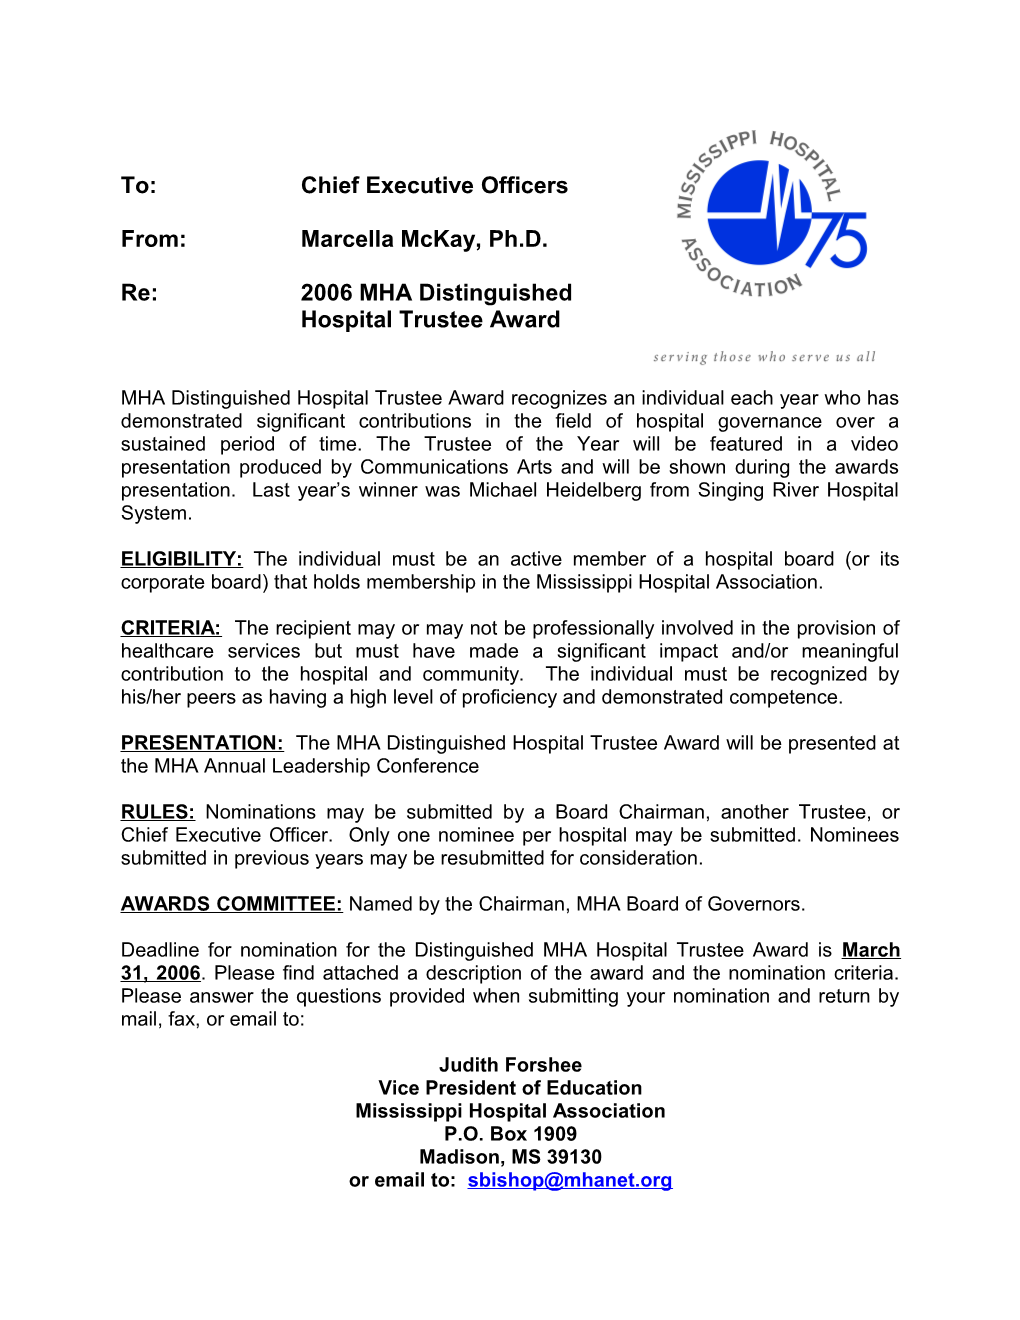 Re:2006 MHA Distinguished Hospital Trustee Award